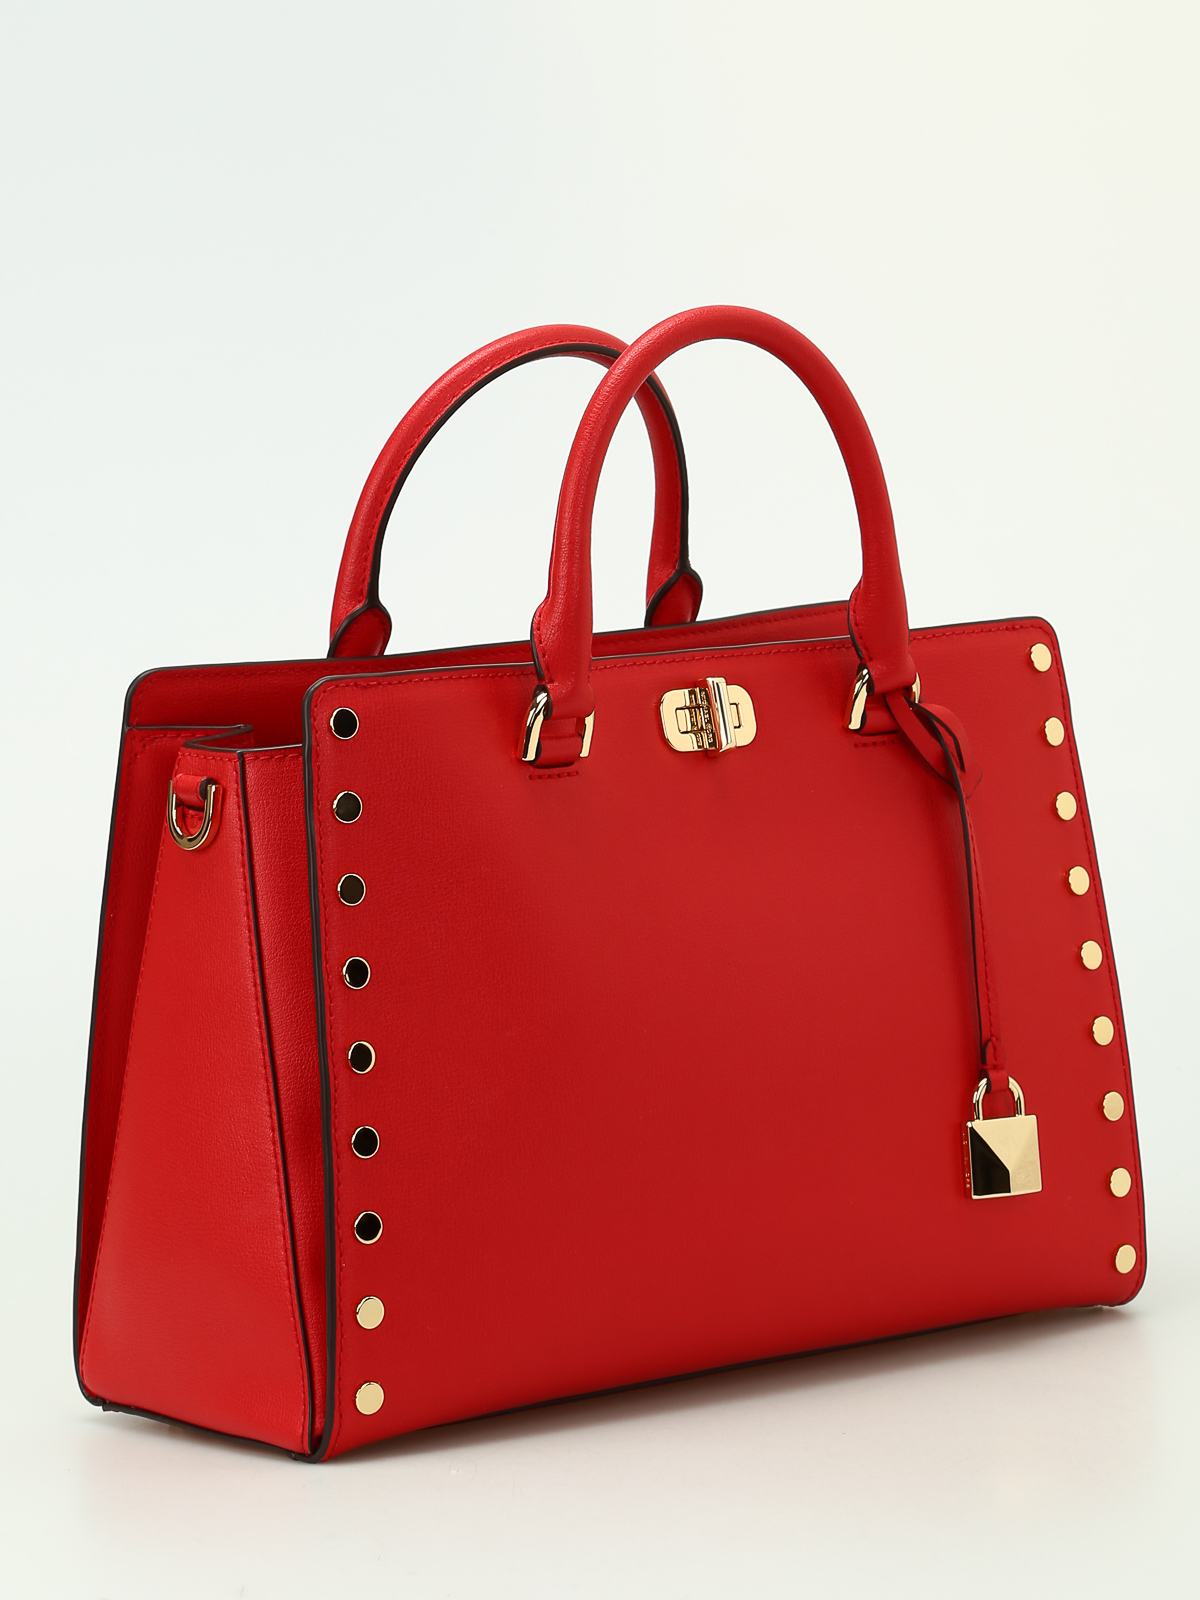 MK handbags with studs